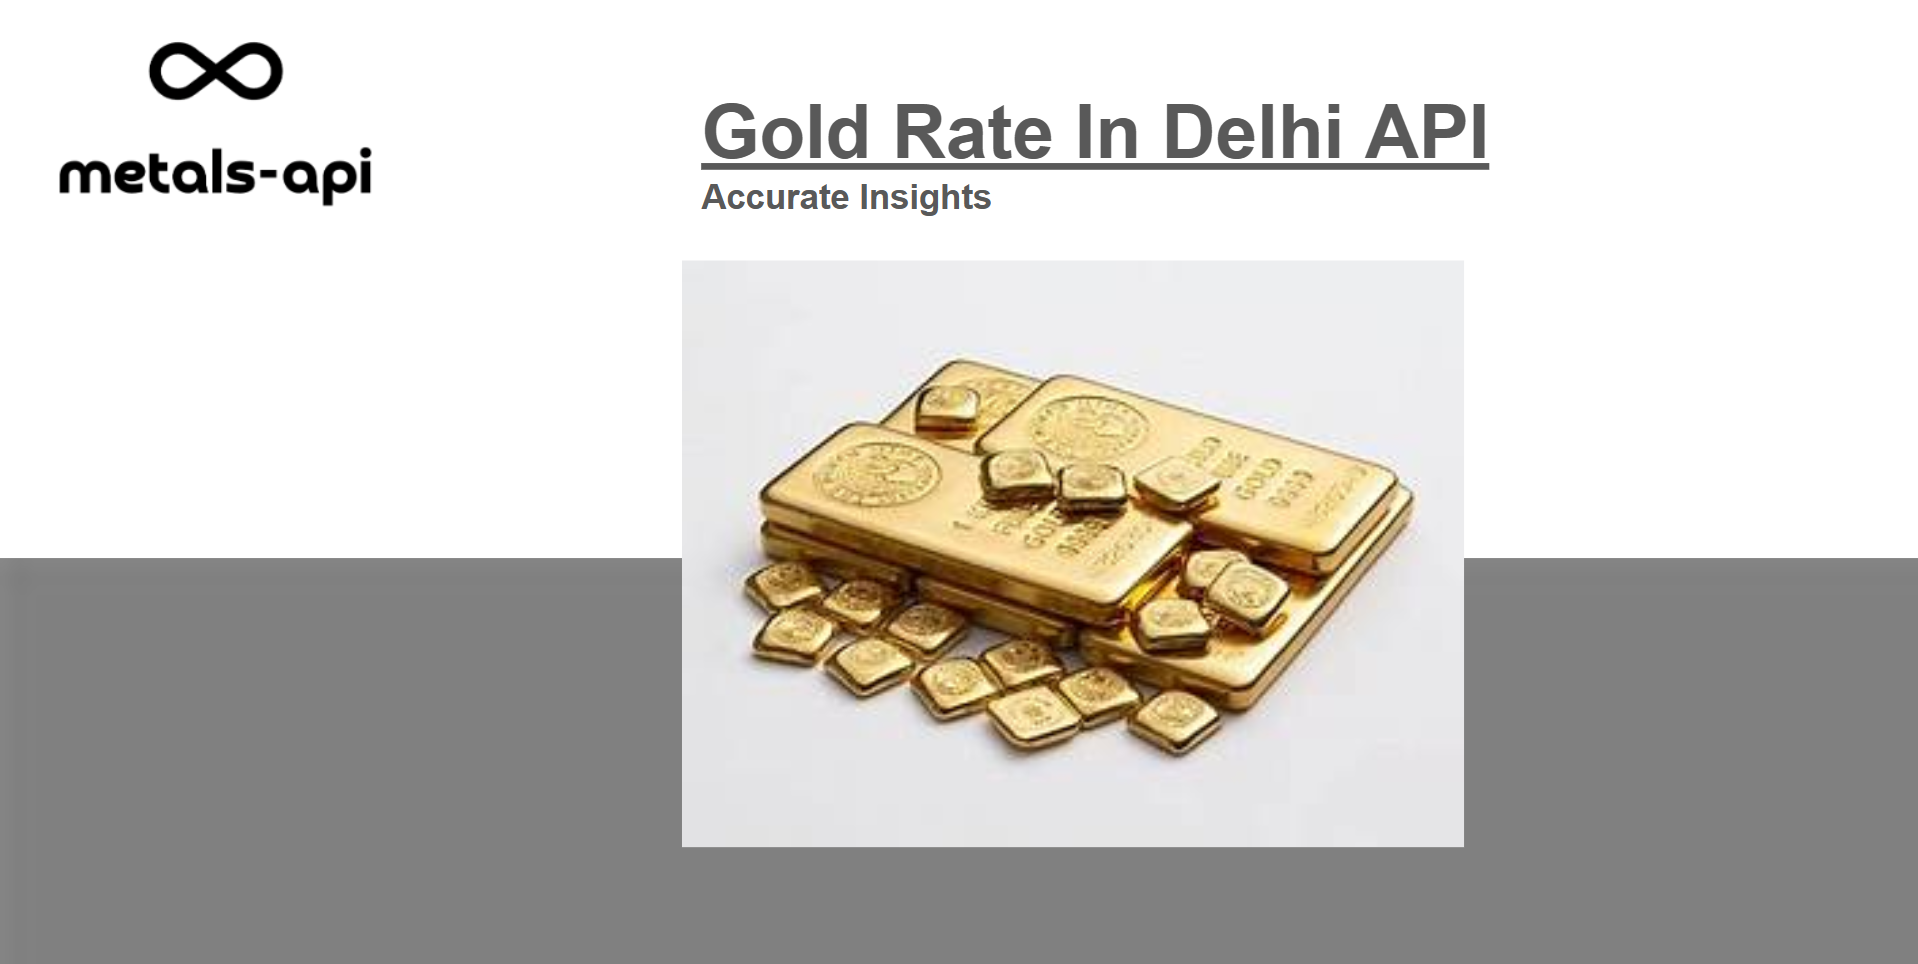 Gold Rate In Delhi API: Accurate Insights